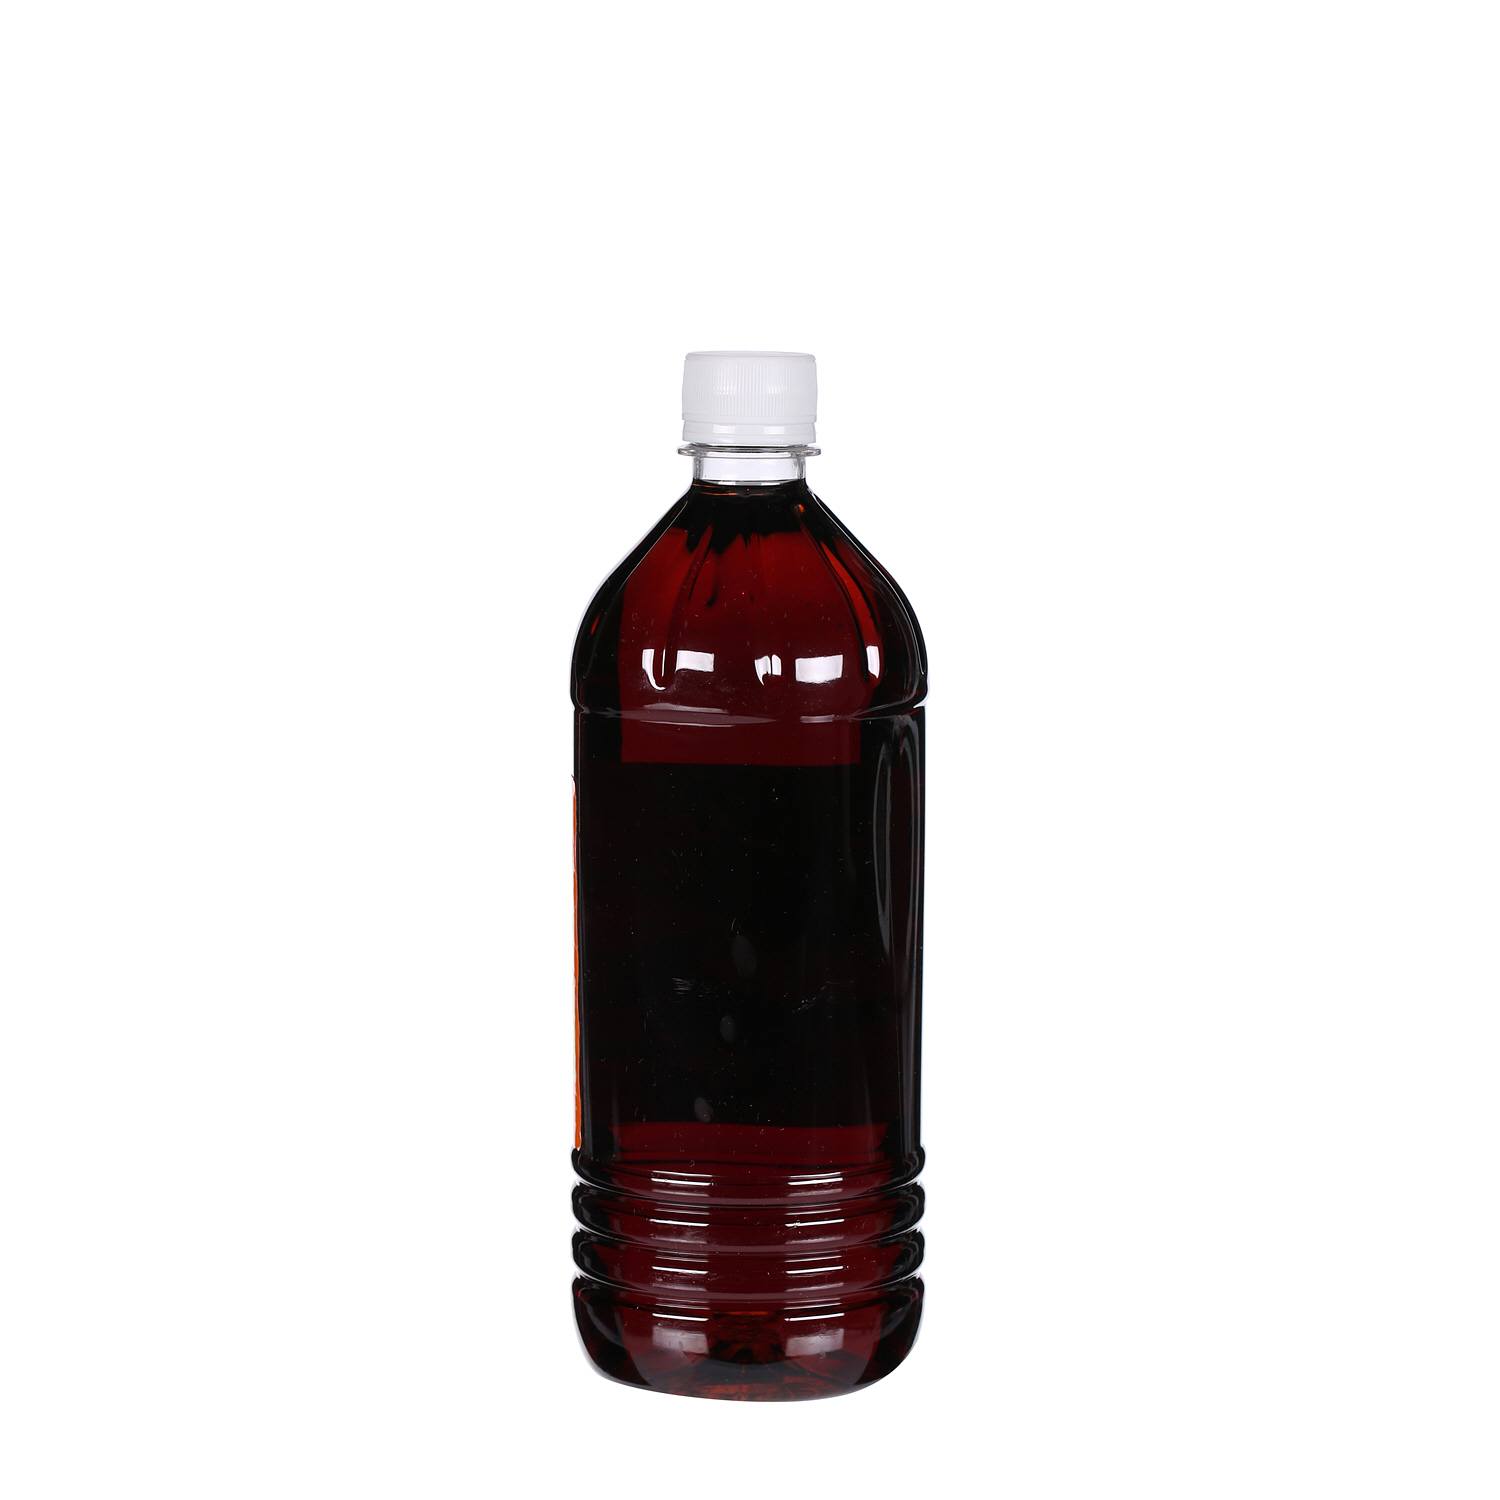 American Classic Red Vinegar 1000Ml